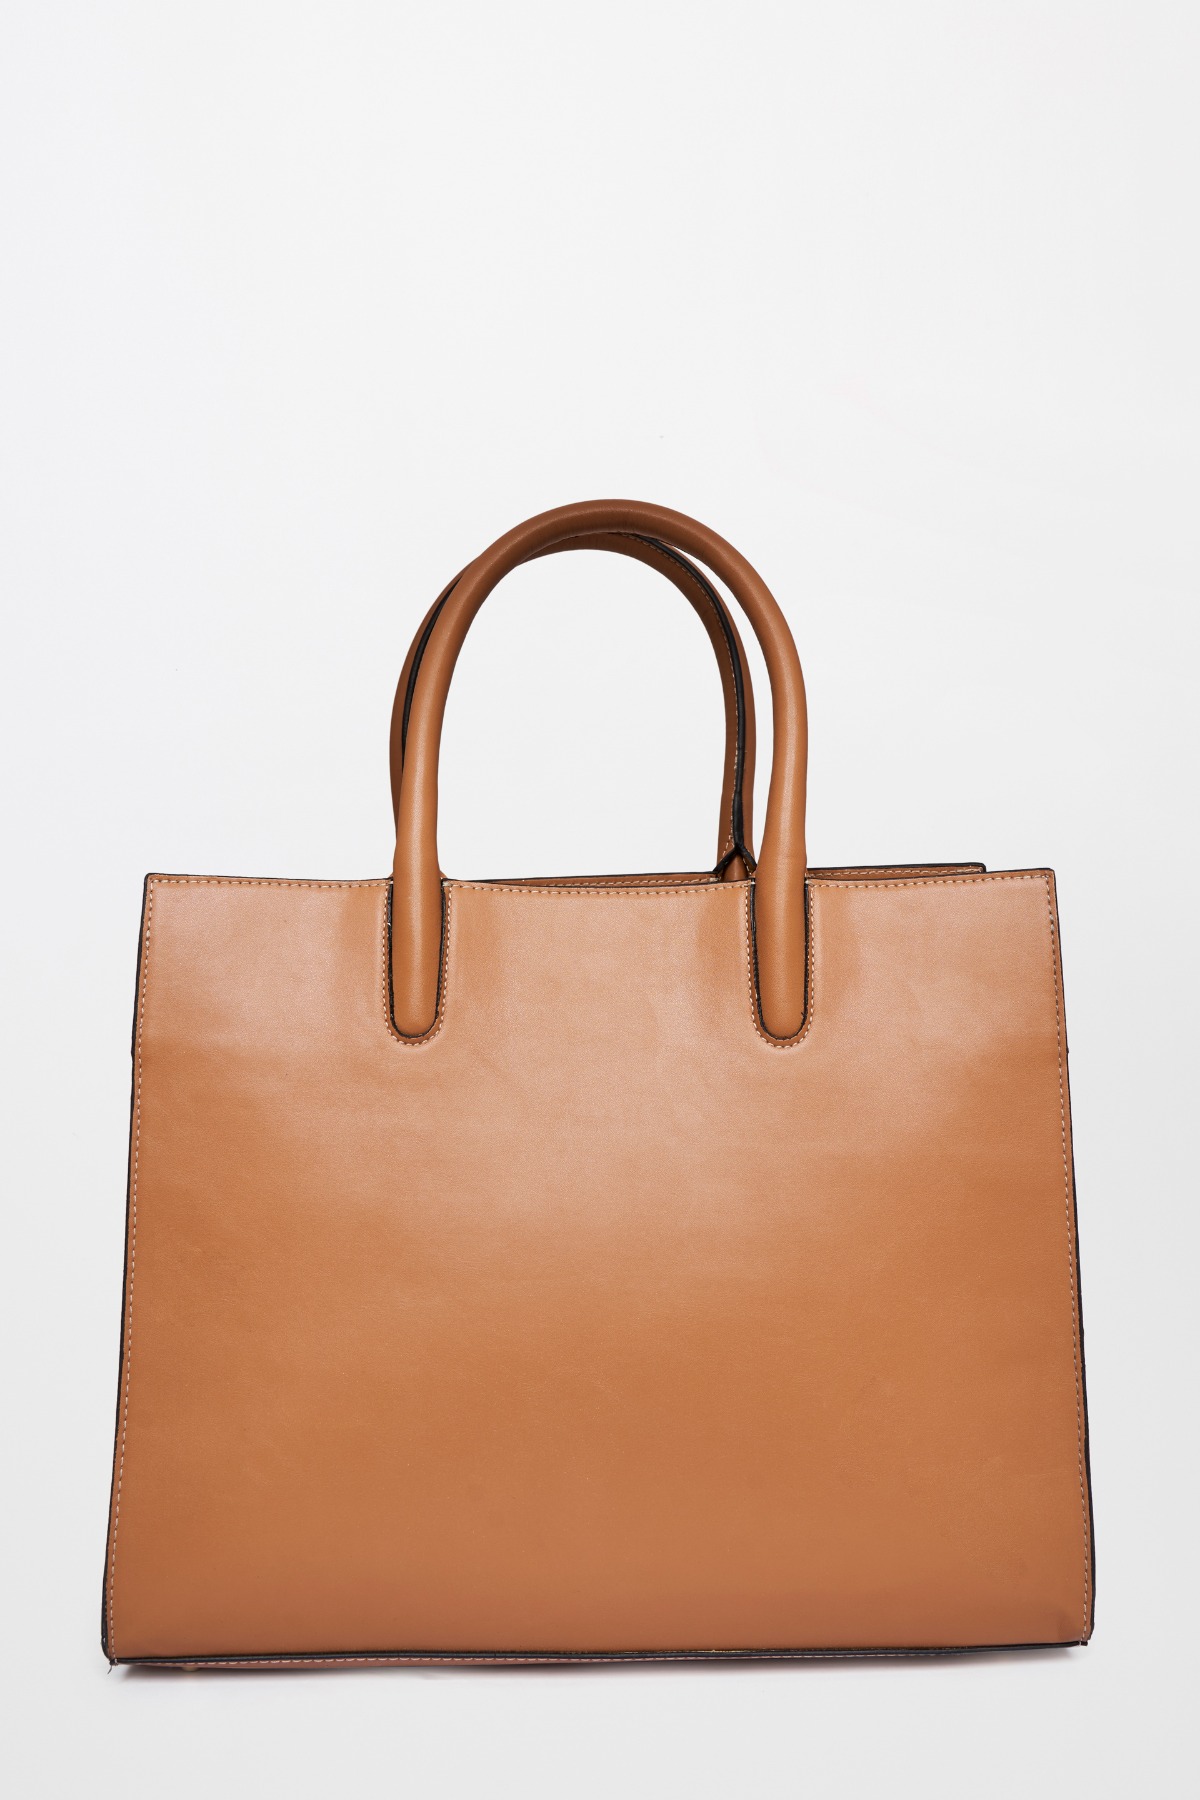 4 - Tan Handbag, image 3